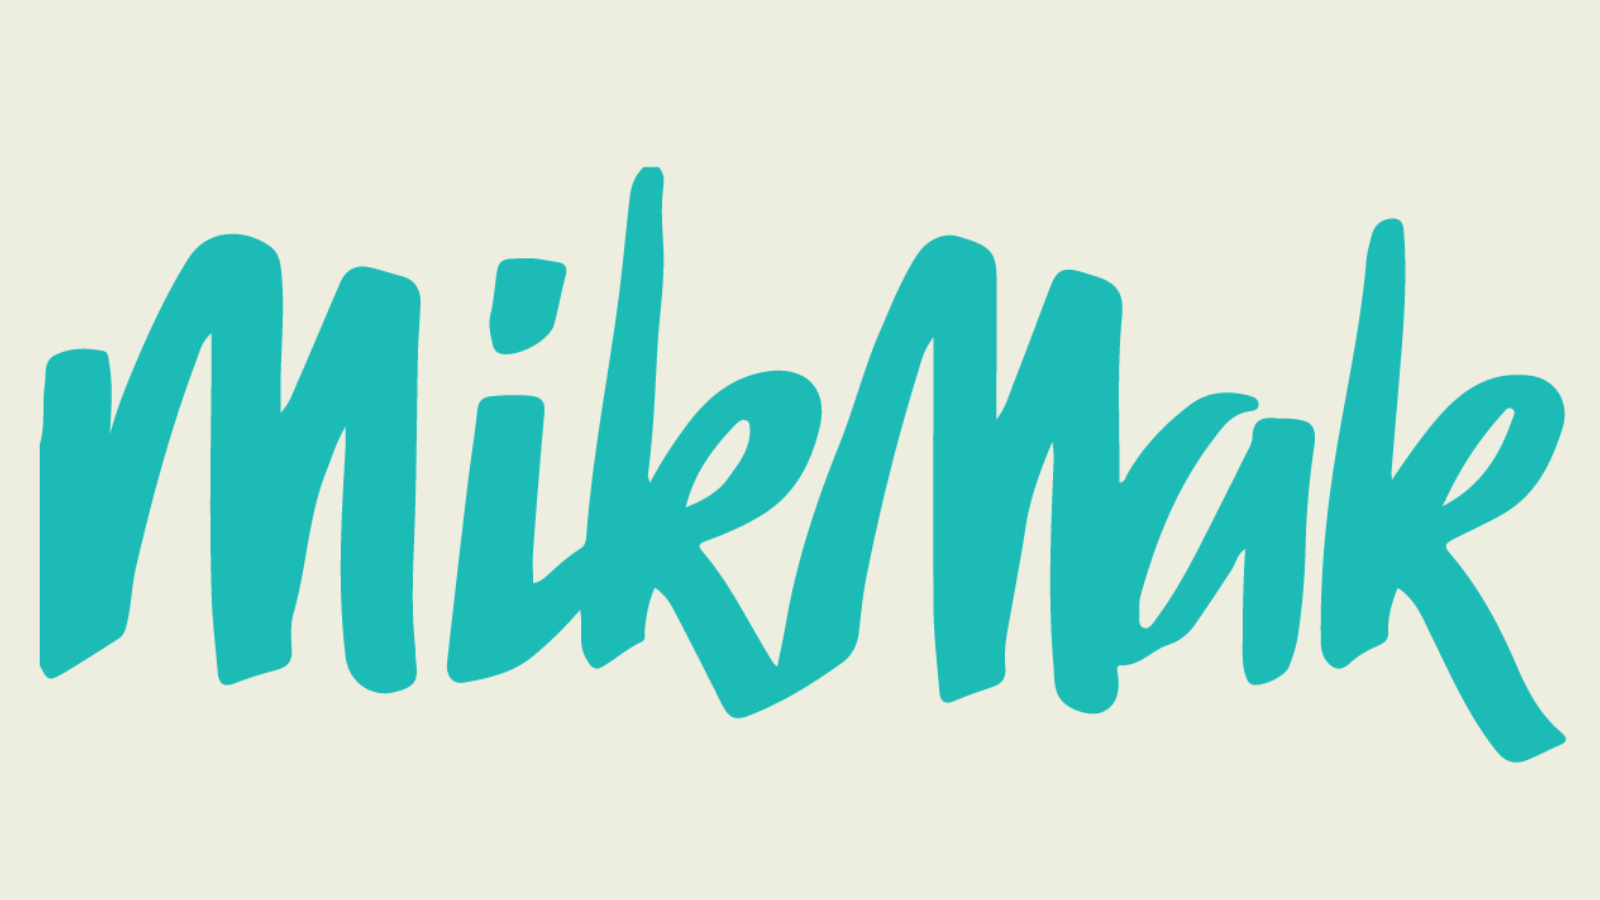 MikMak Logo